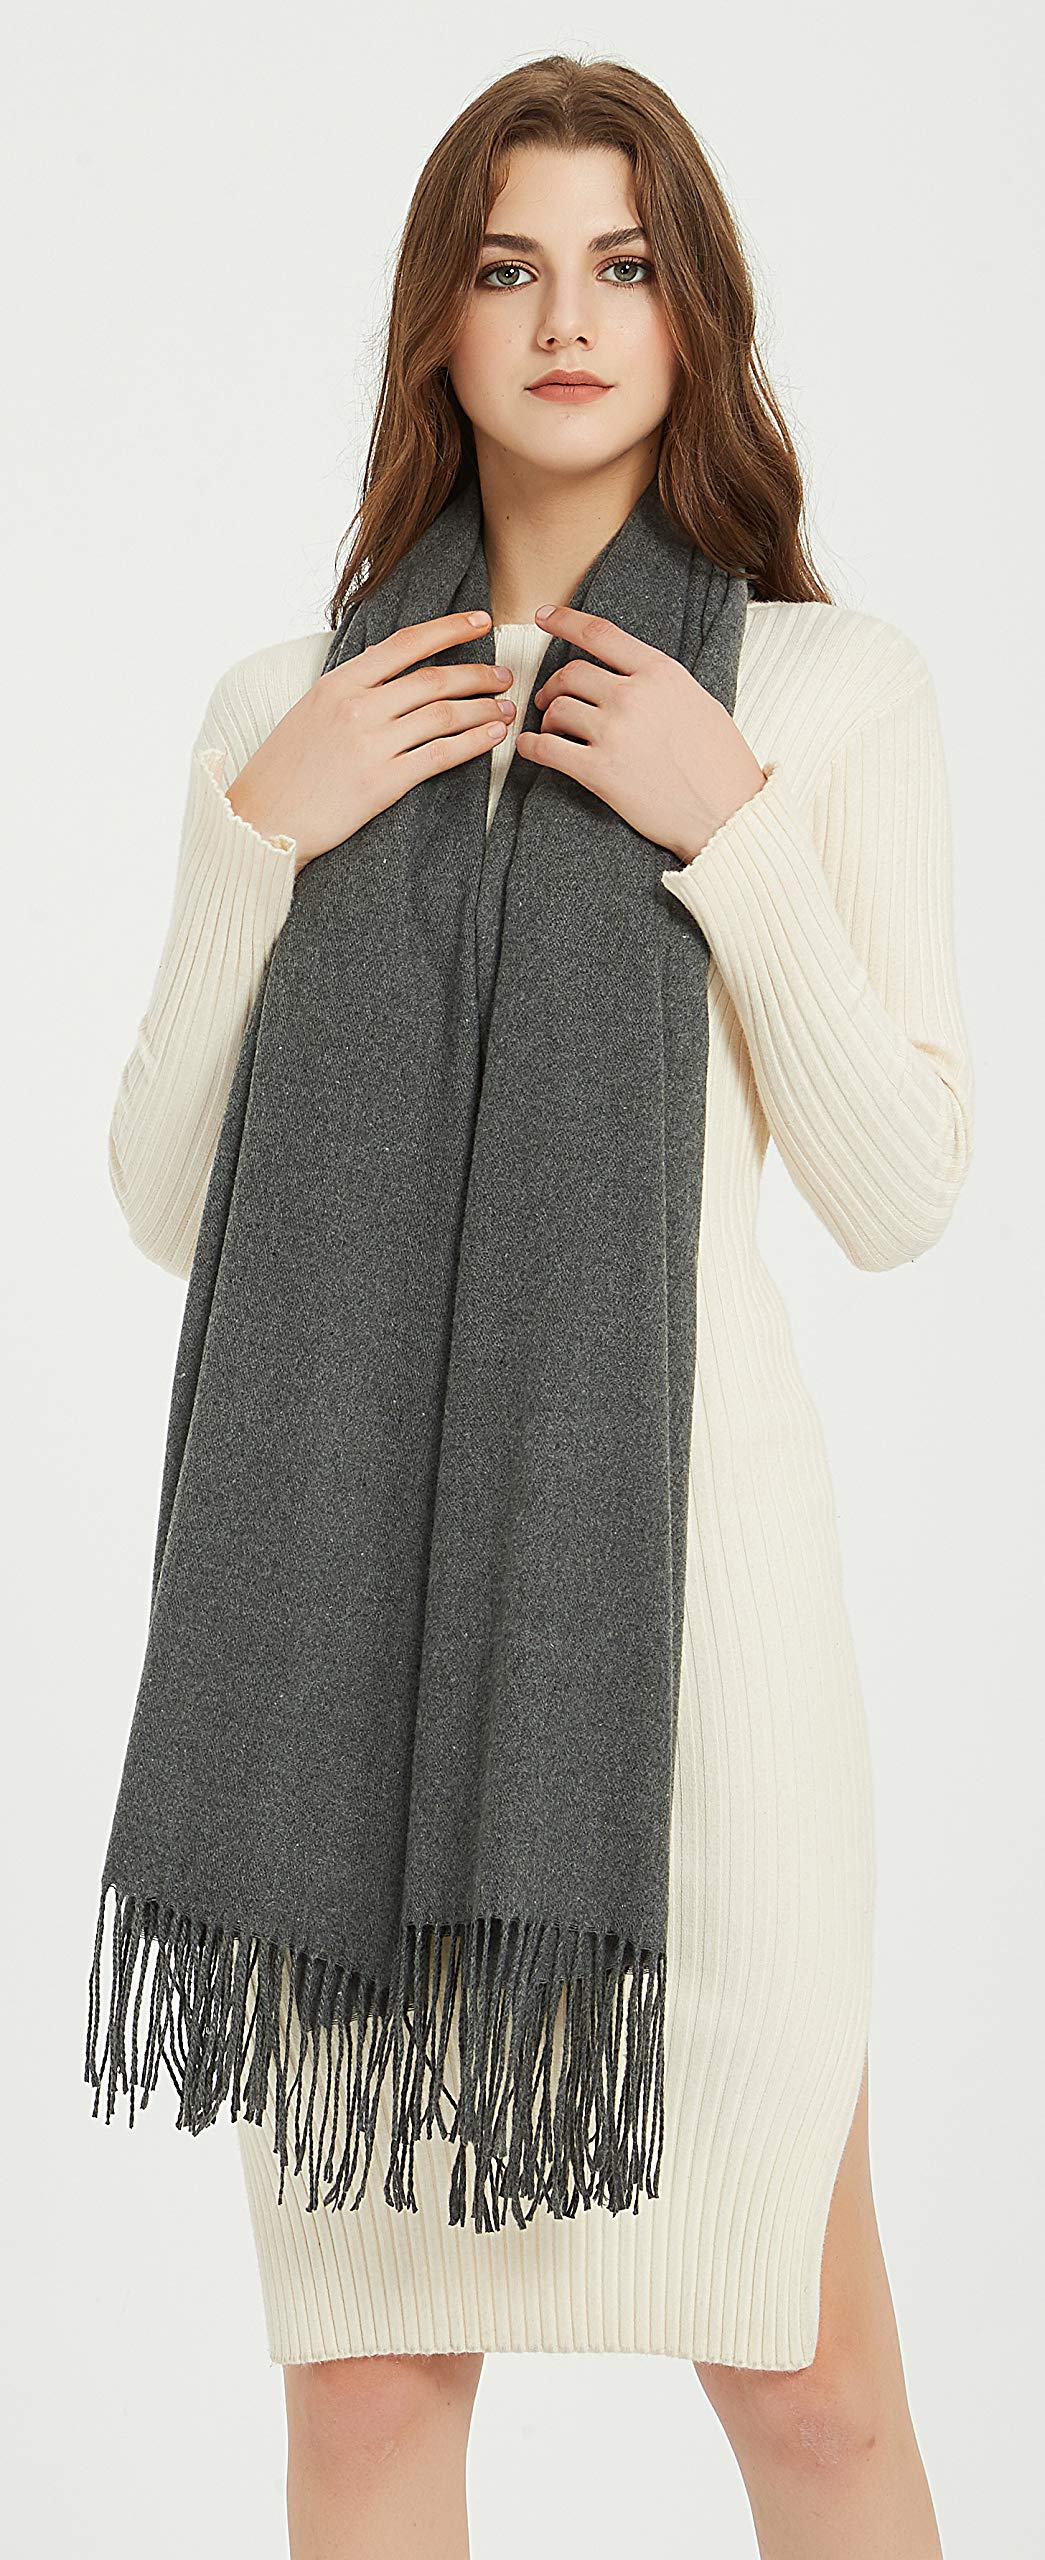 Soft Elegant Solid Color Virgin Wool Cashmere Scarf Shawl Warp